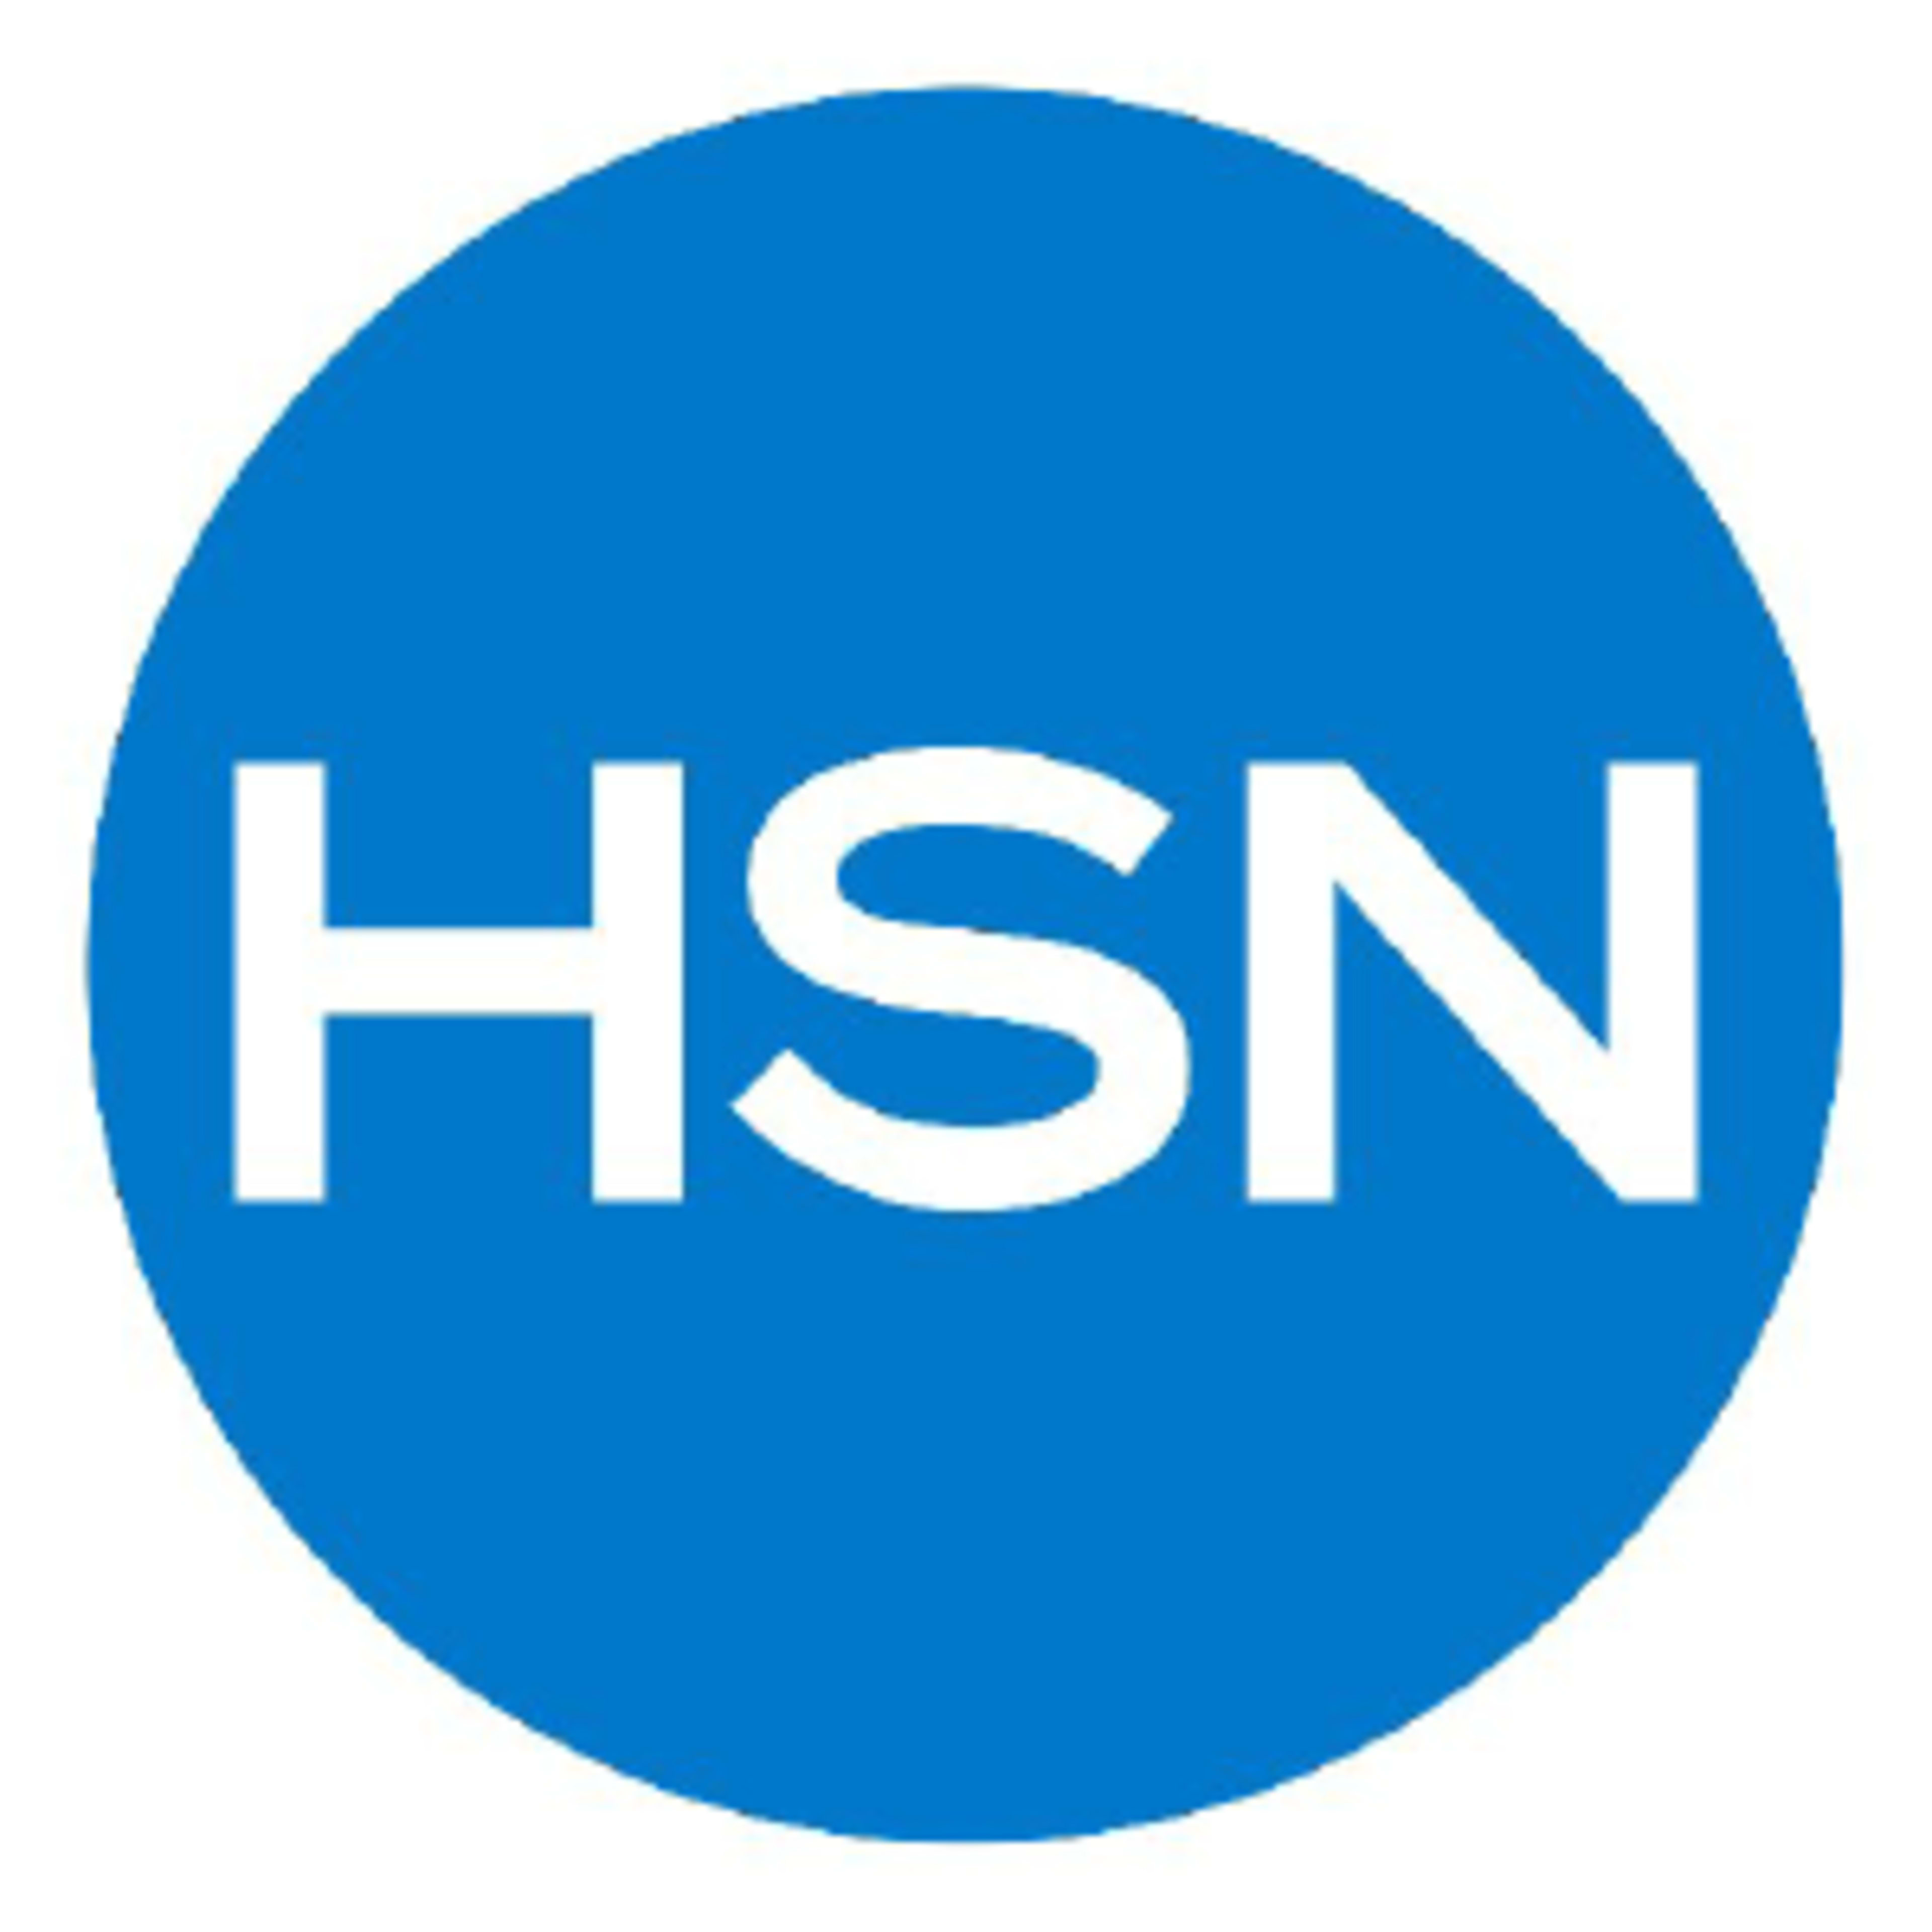 HSN.com - Home Shopping Network Code